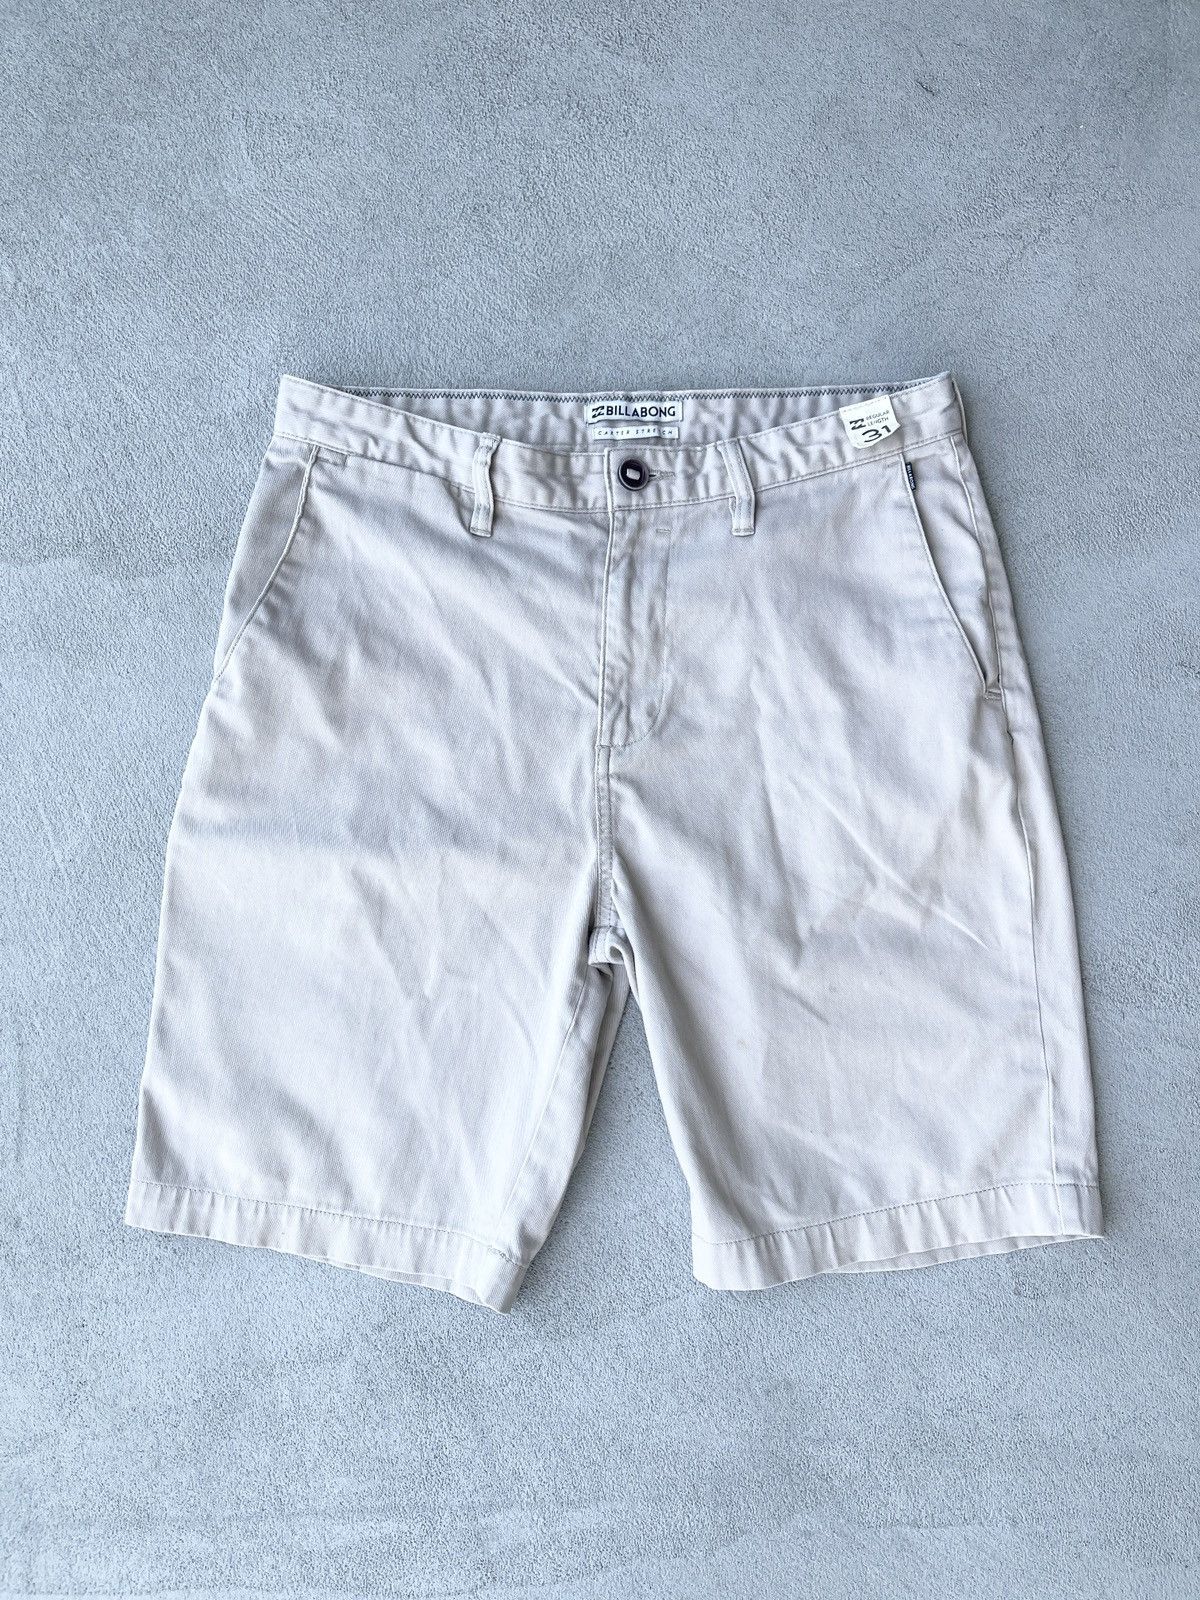 Vintage - STEAL! 2000s Billabong Khaki Shorts - 1